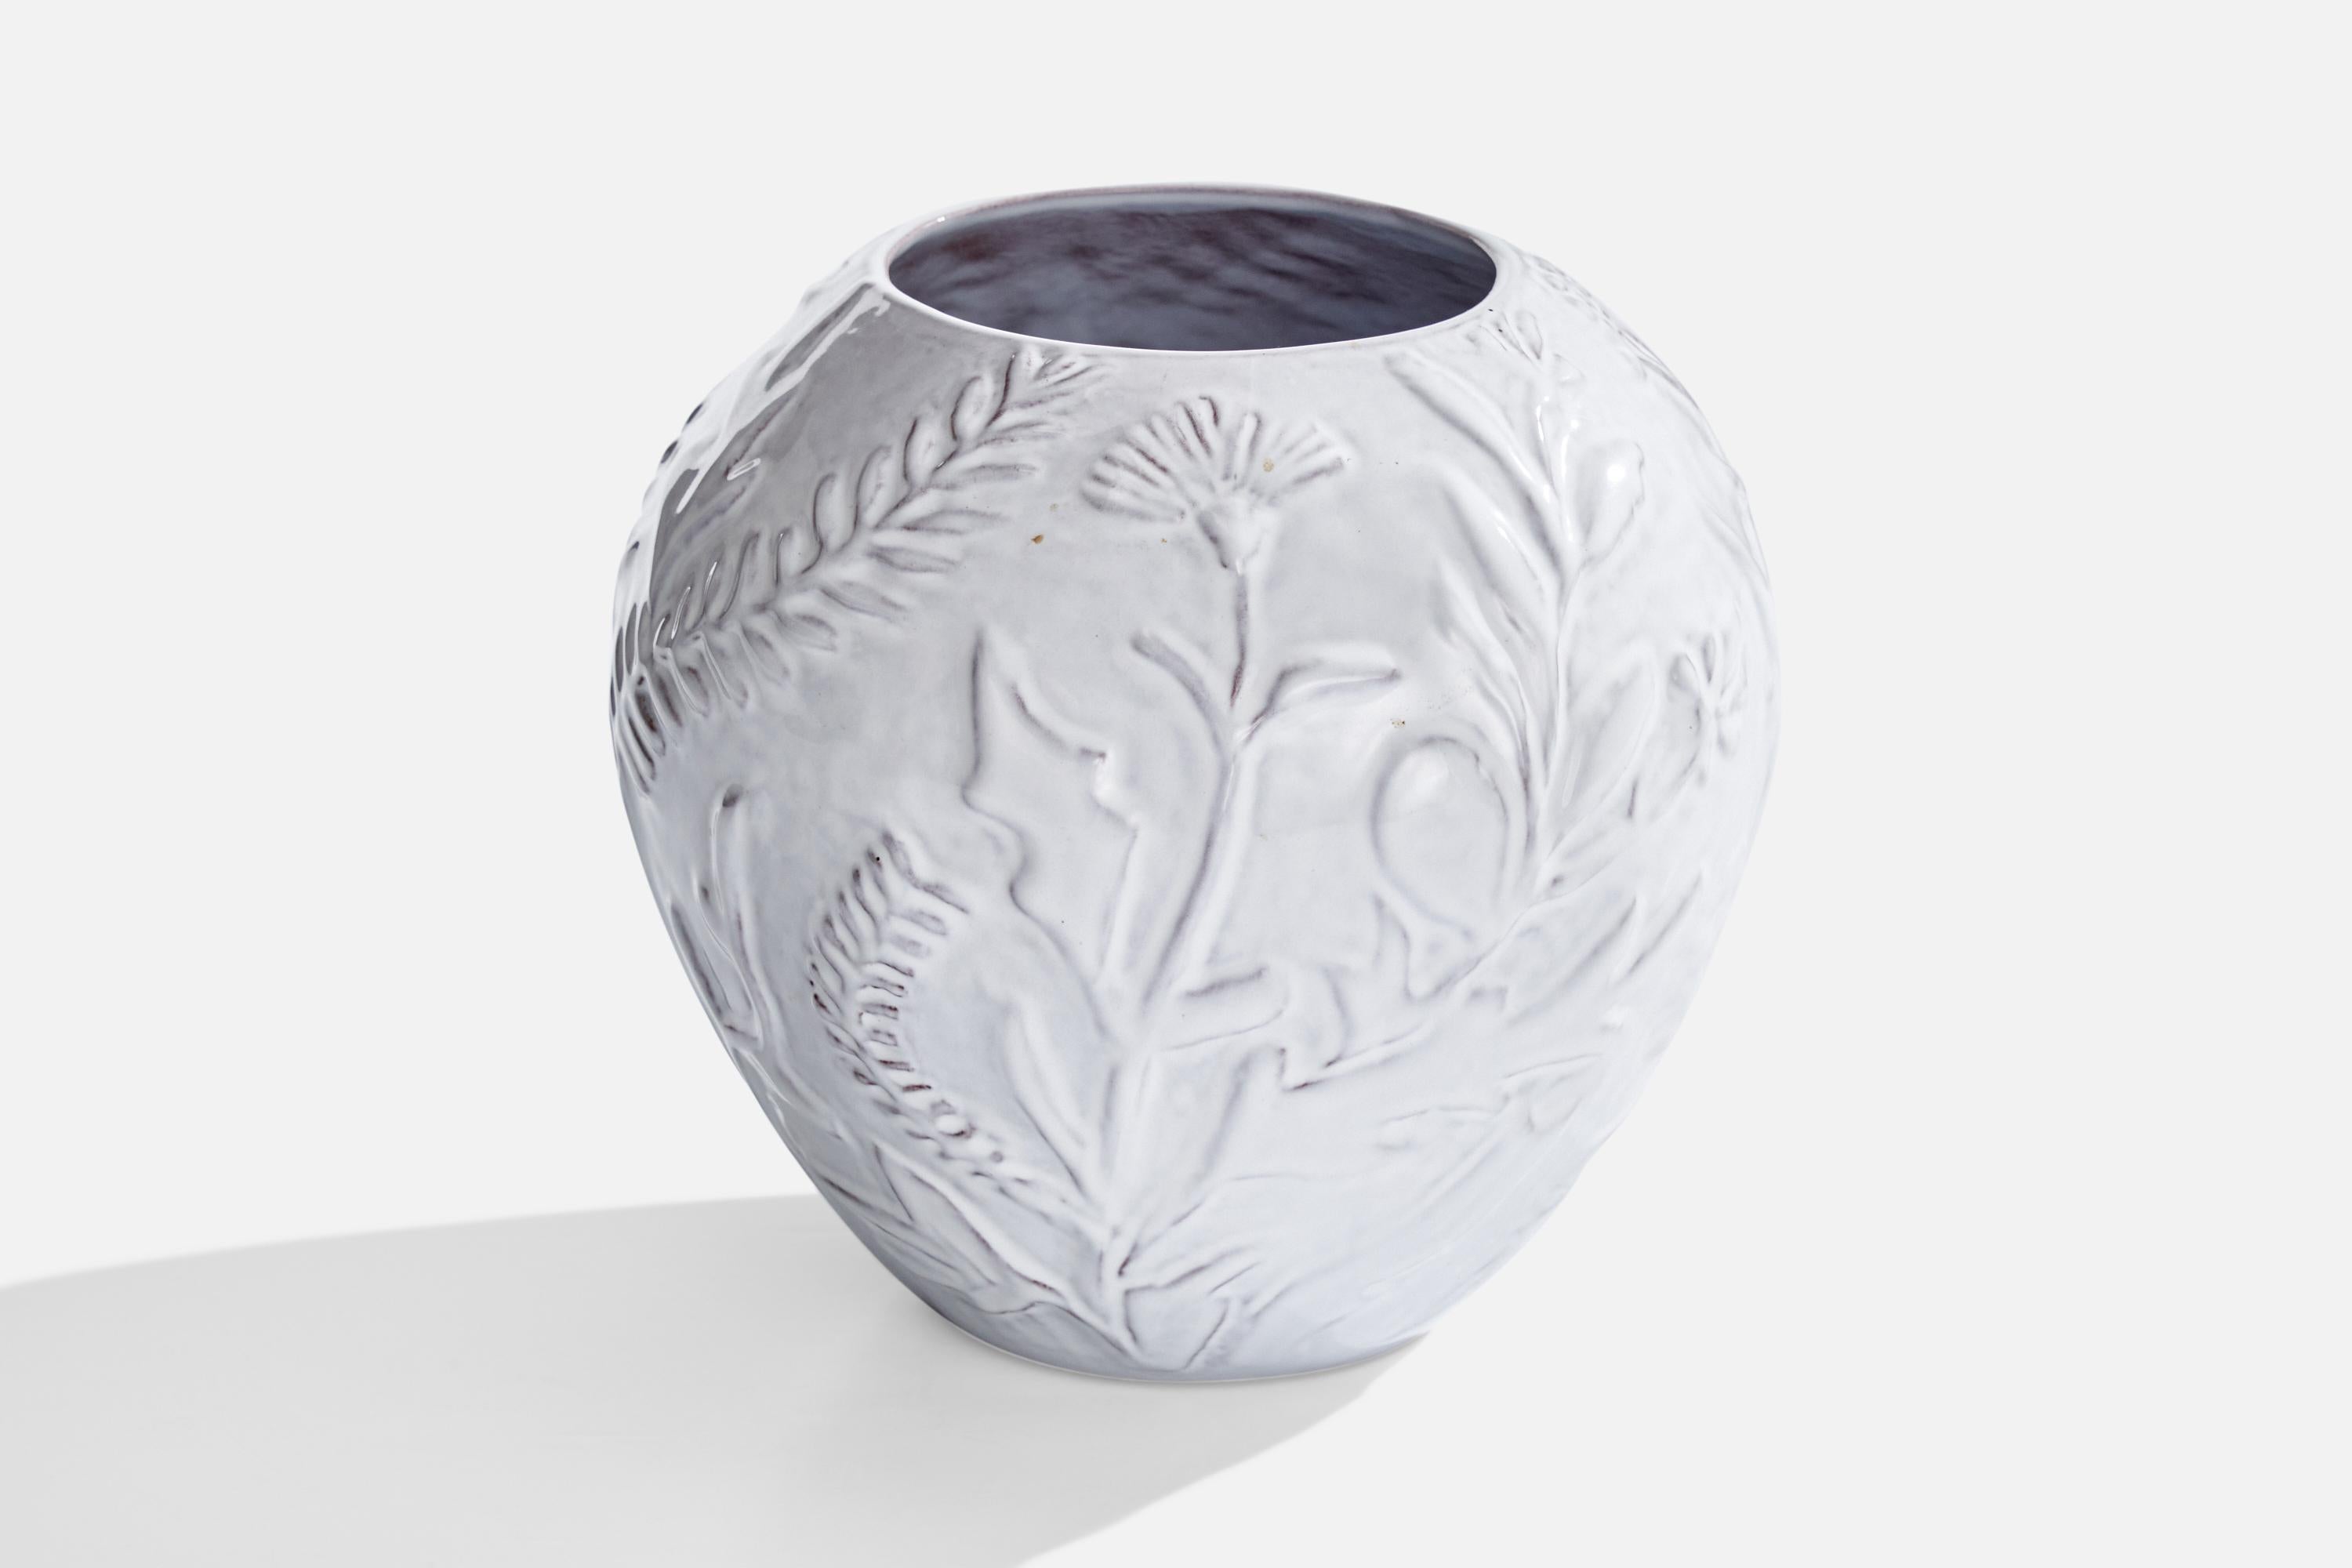 A white-glazed ceramic vase designed and produced by Nittsjö, Sweden, 1930s.